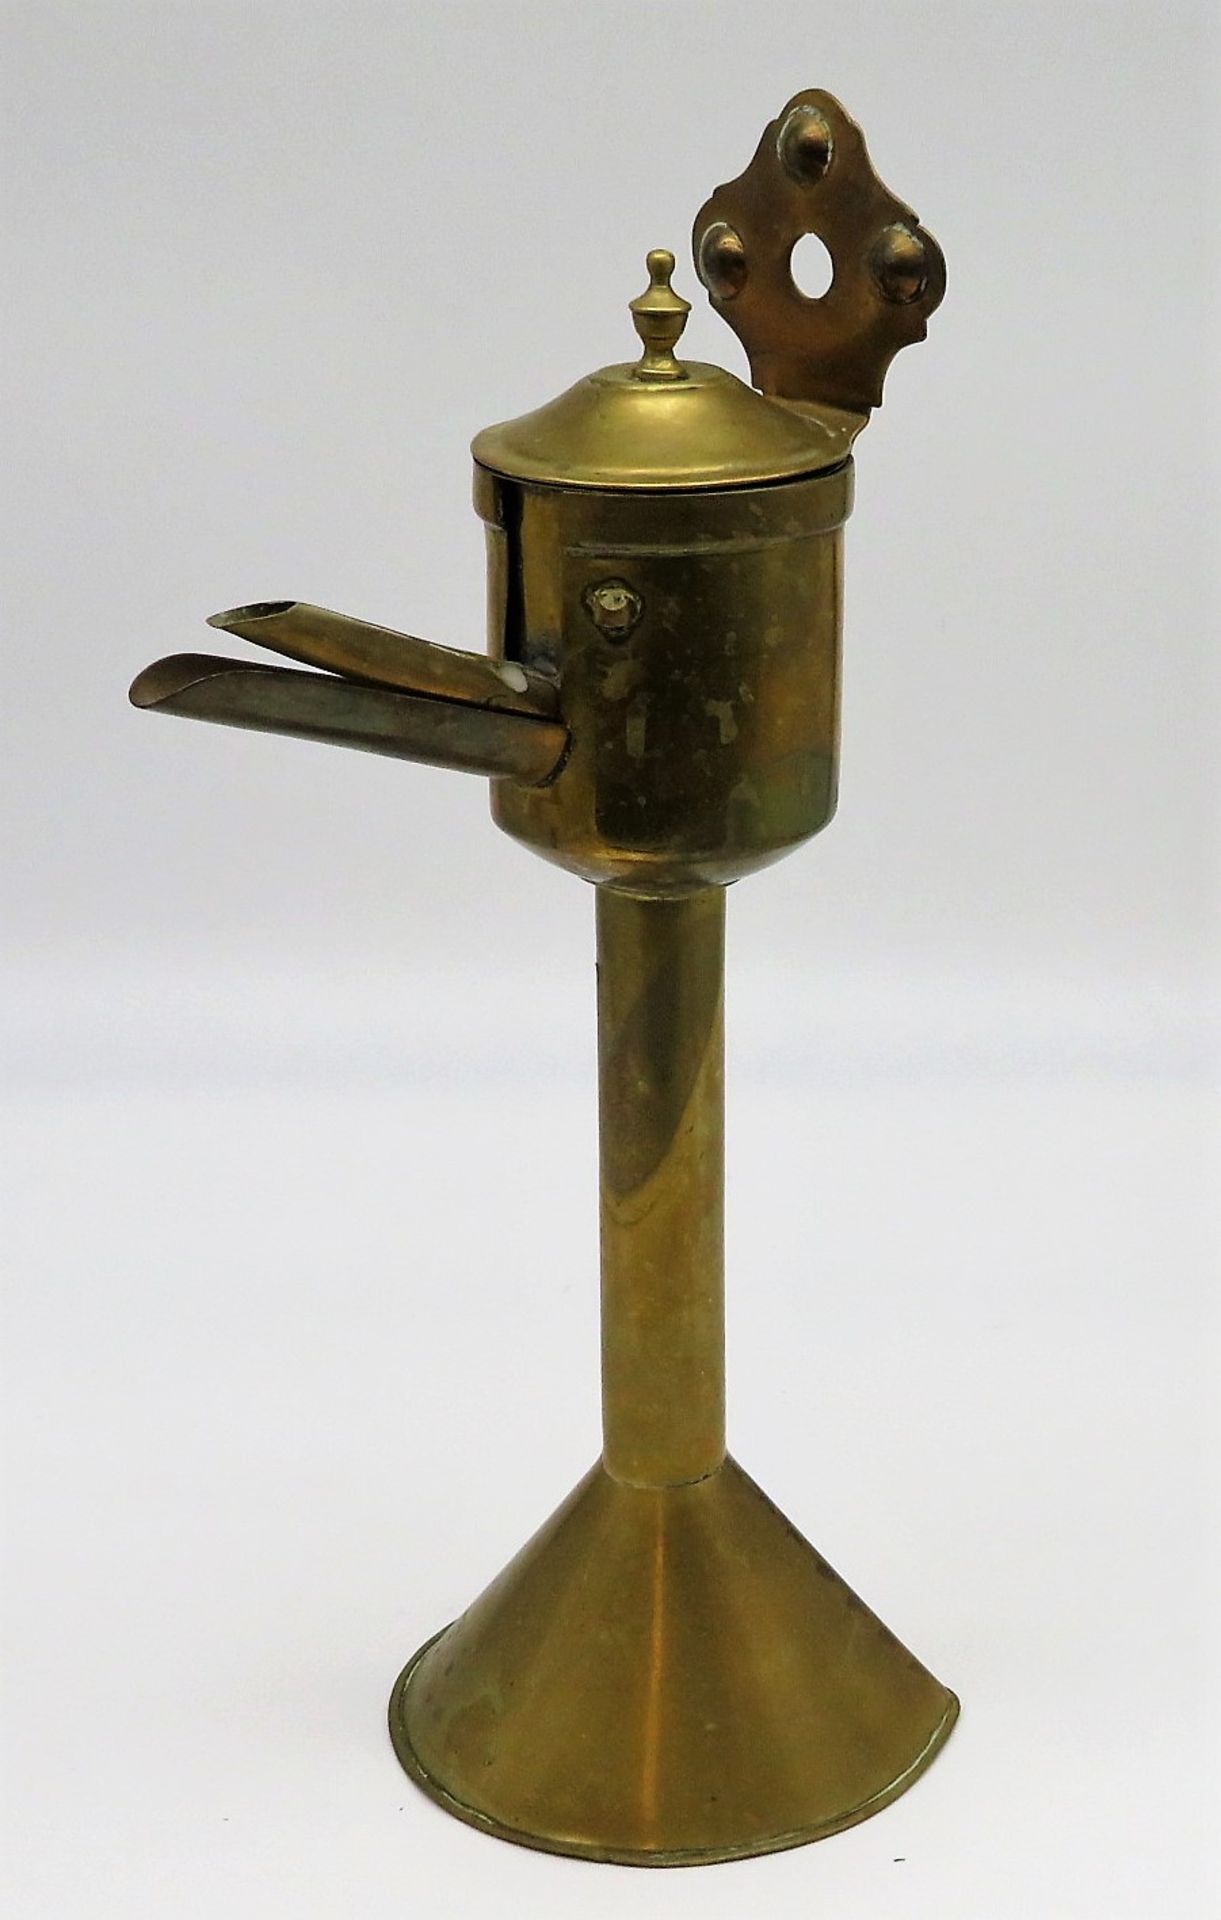 Öllampe, sog. "Rotznase", 19. Jahrhundert, Messing, h 34 cm, d 11,5 cm.